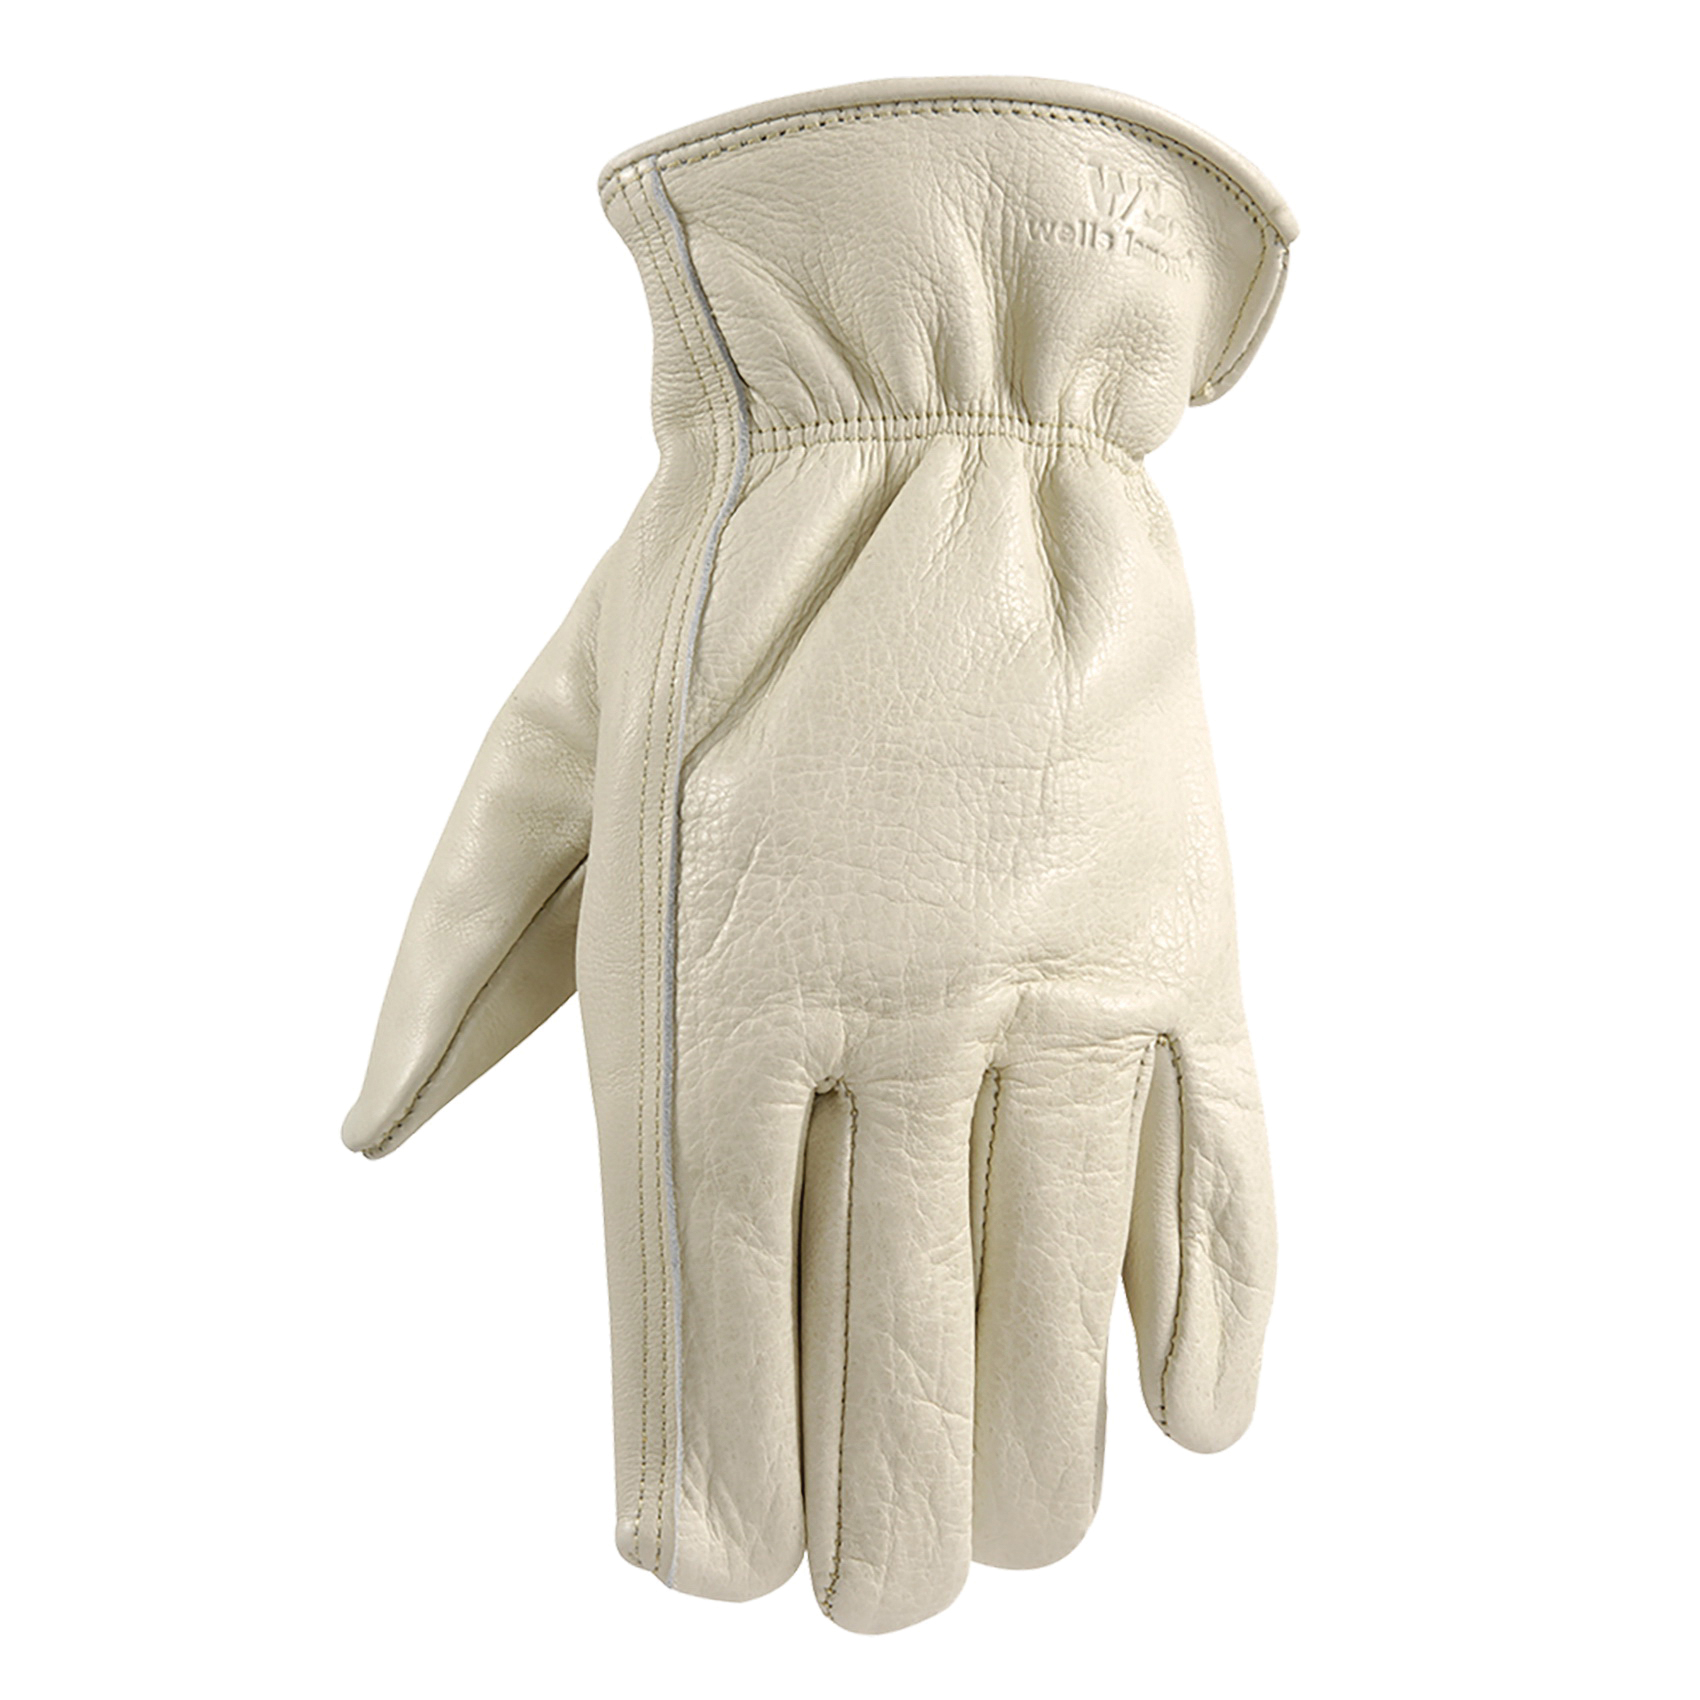 1130L Work Gloves, Men's, L, Keystone Thumb, Slip-On Cuff, Grain Cowhide Leather, White